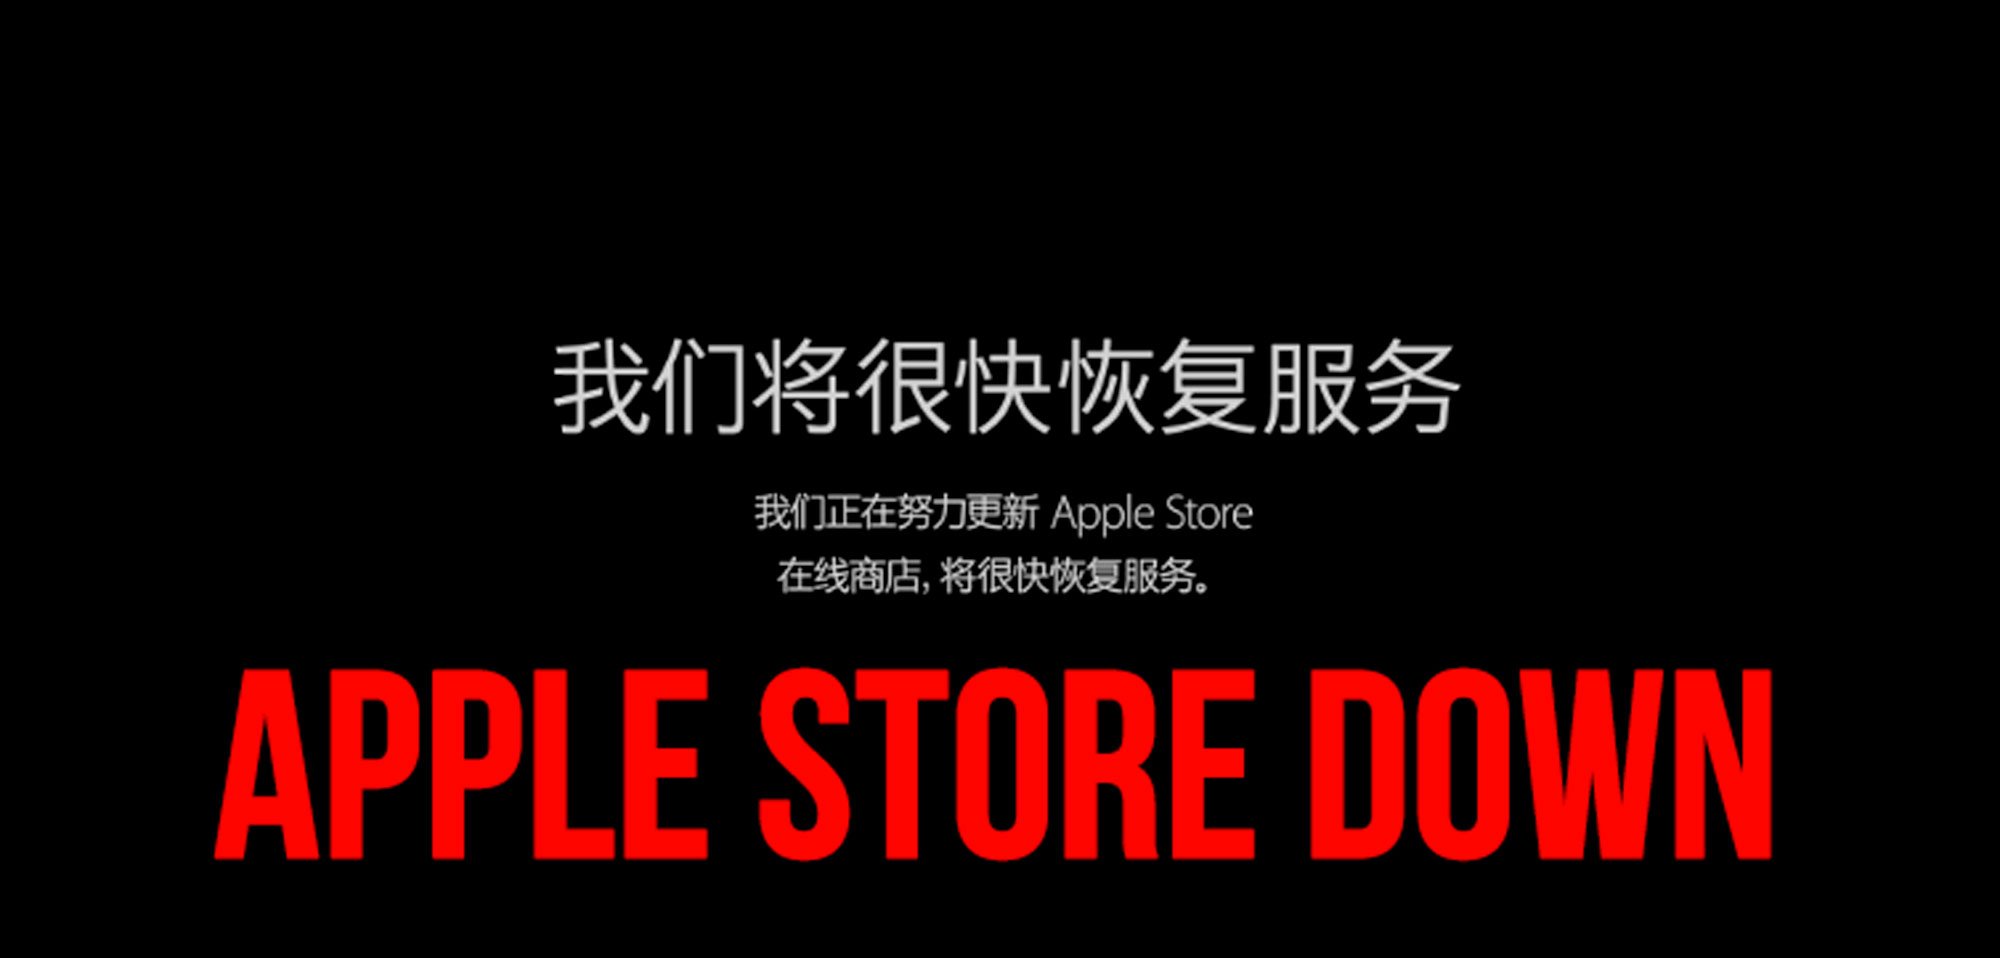 Apple Store down: Neue iPads und iMacs! 3